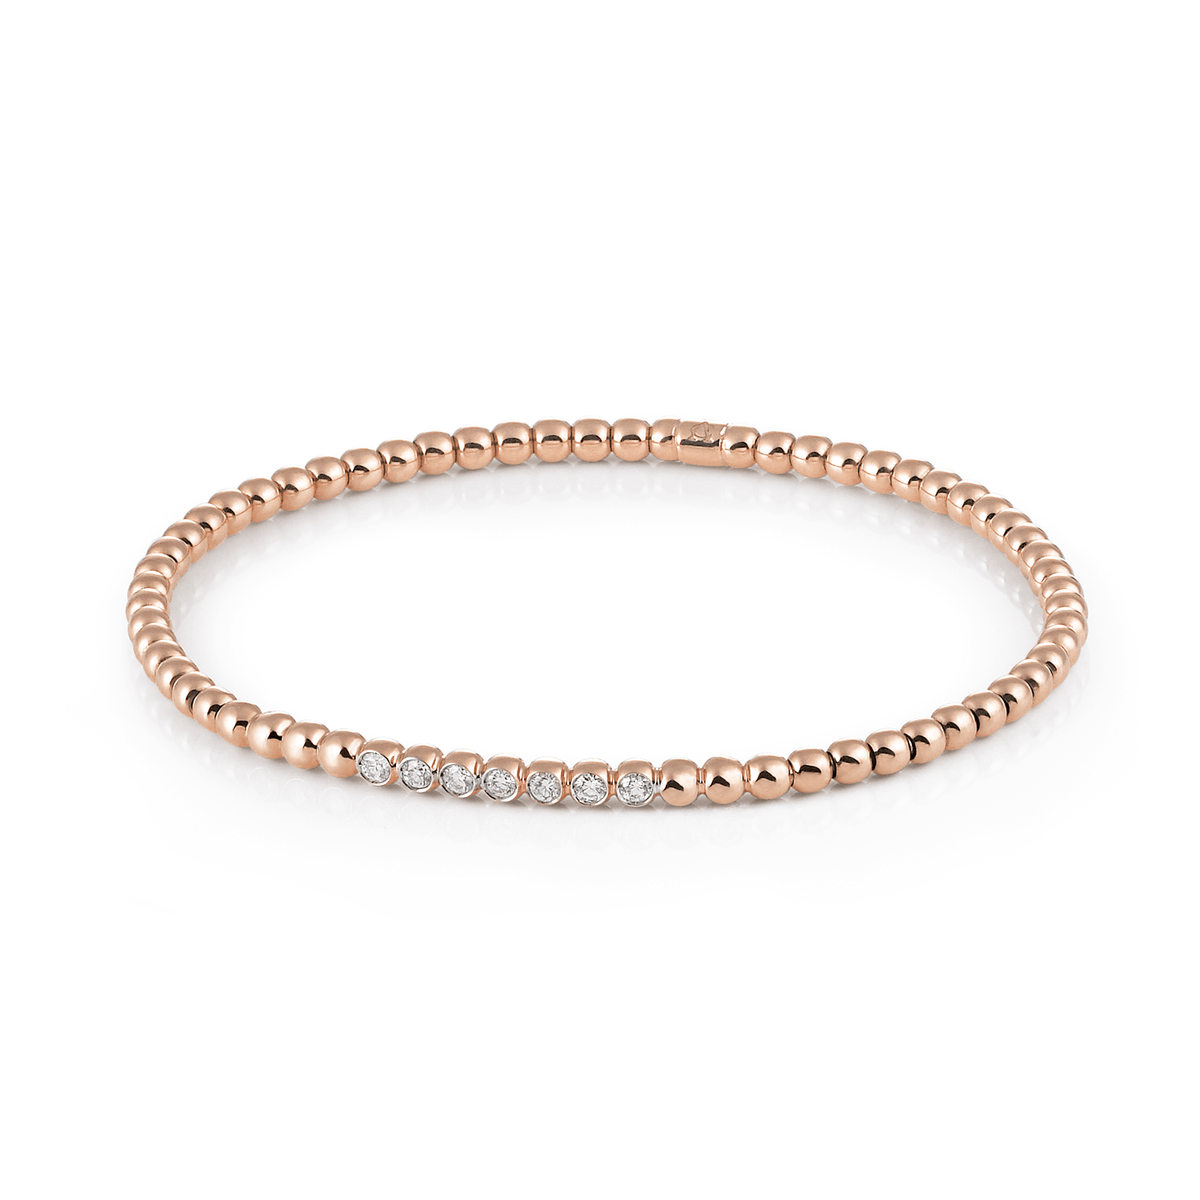 Al Coro Stretchy bracelet in 18k Rose Gold with 7 Diamonds - Orsini Jewellers NZ